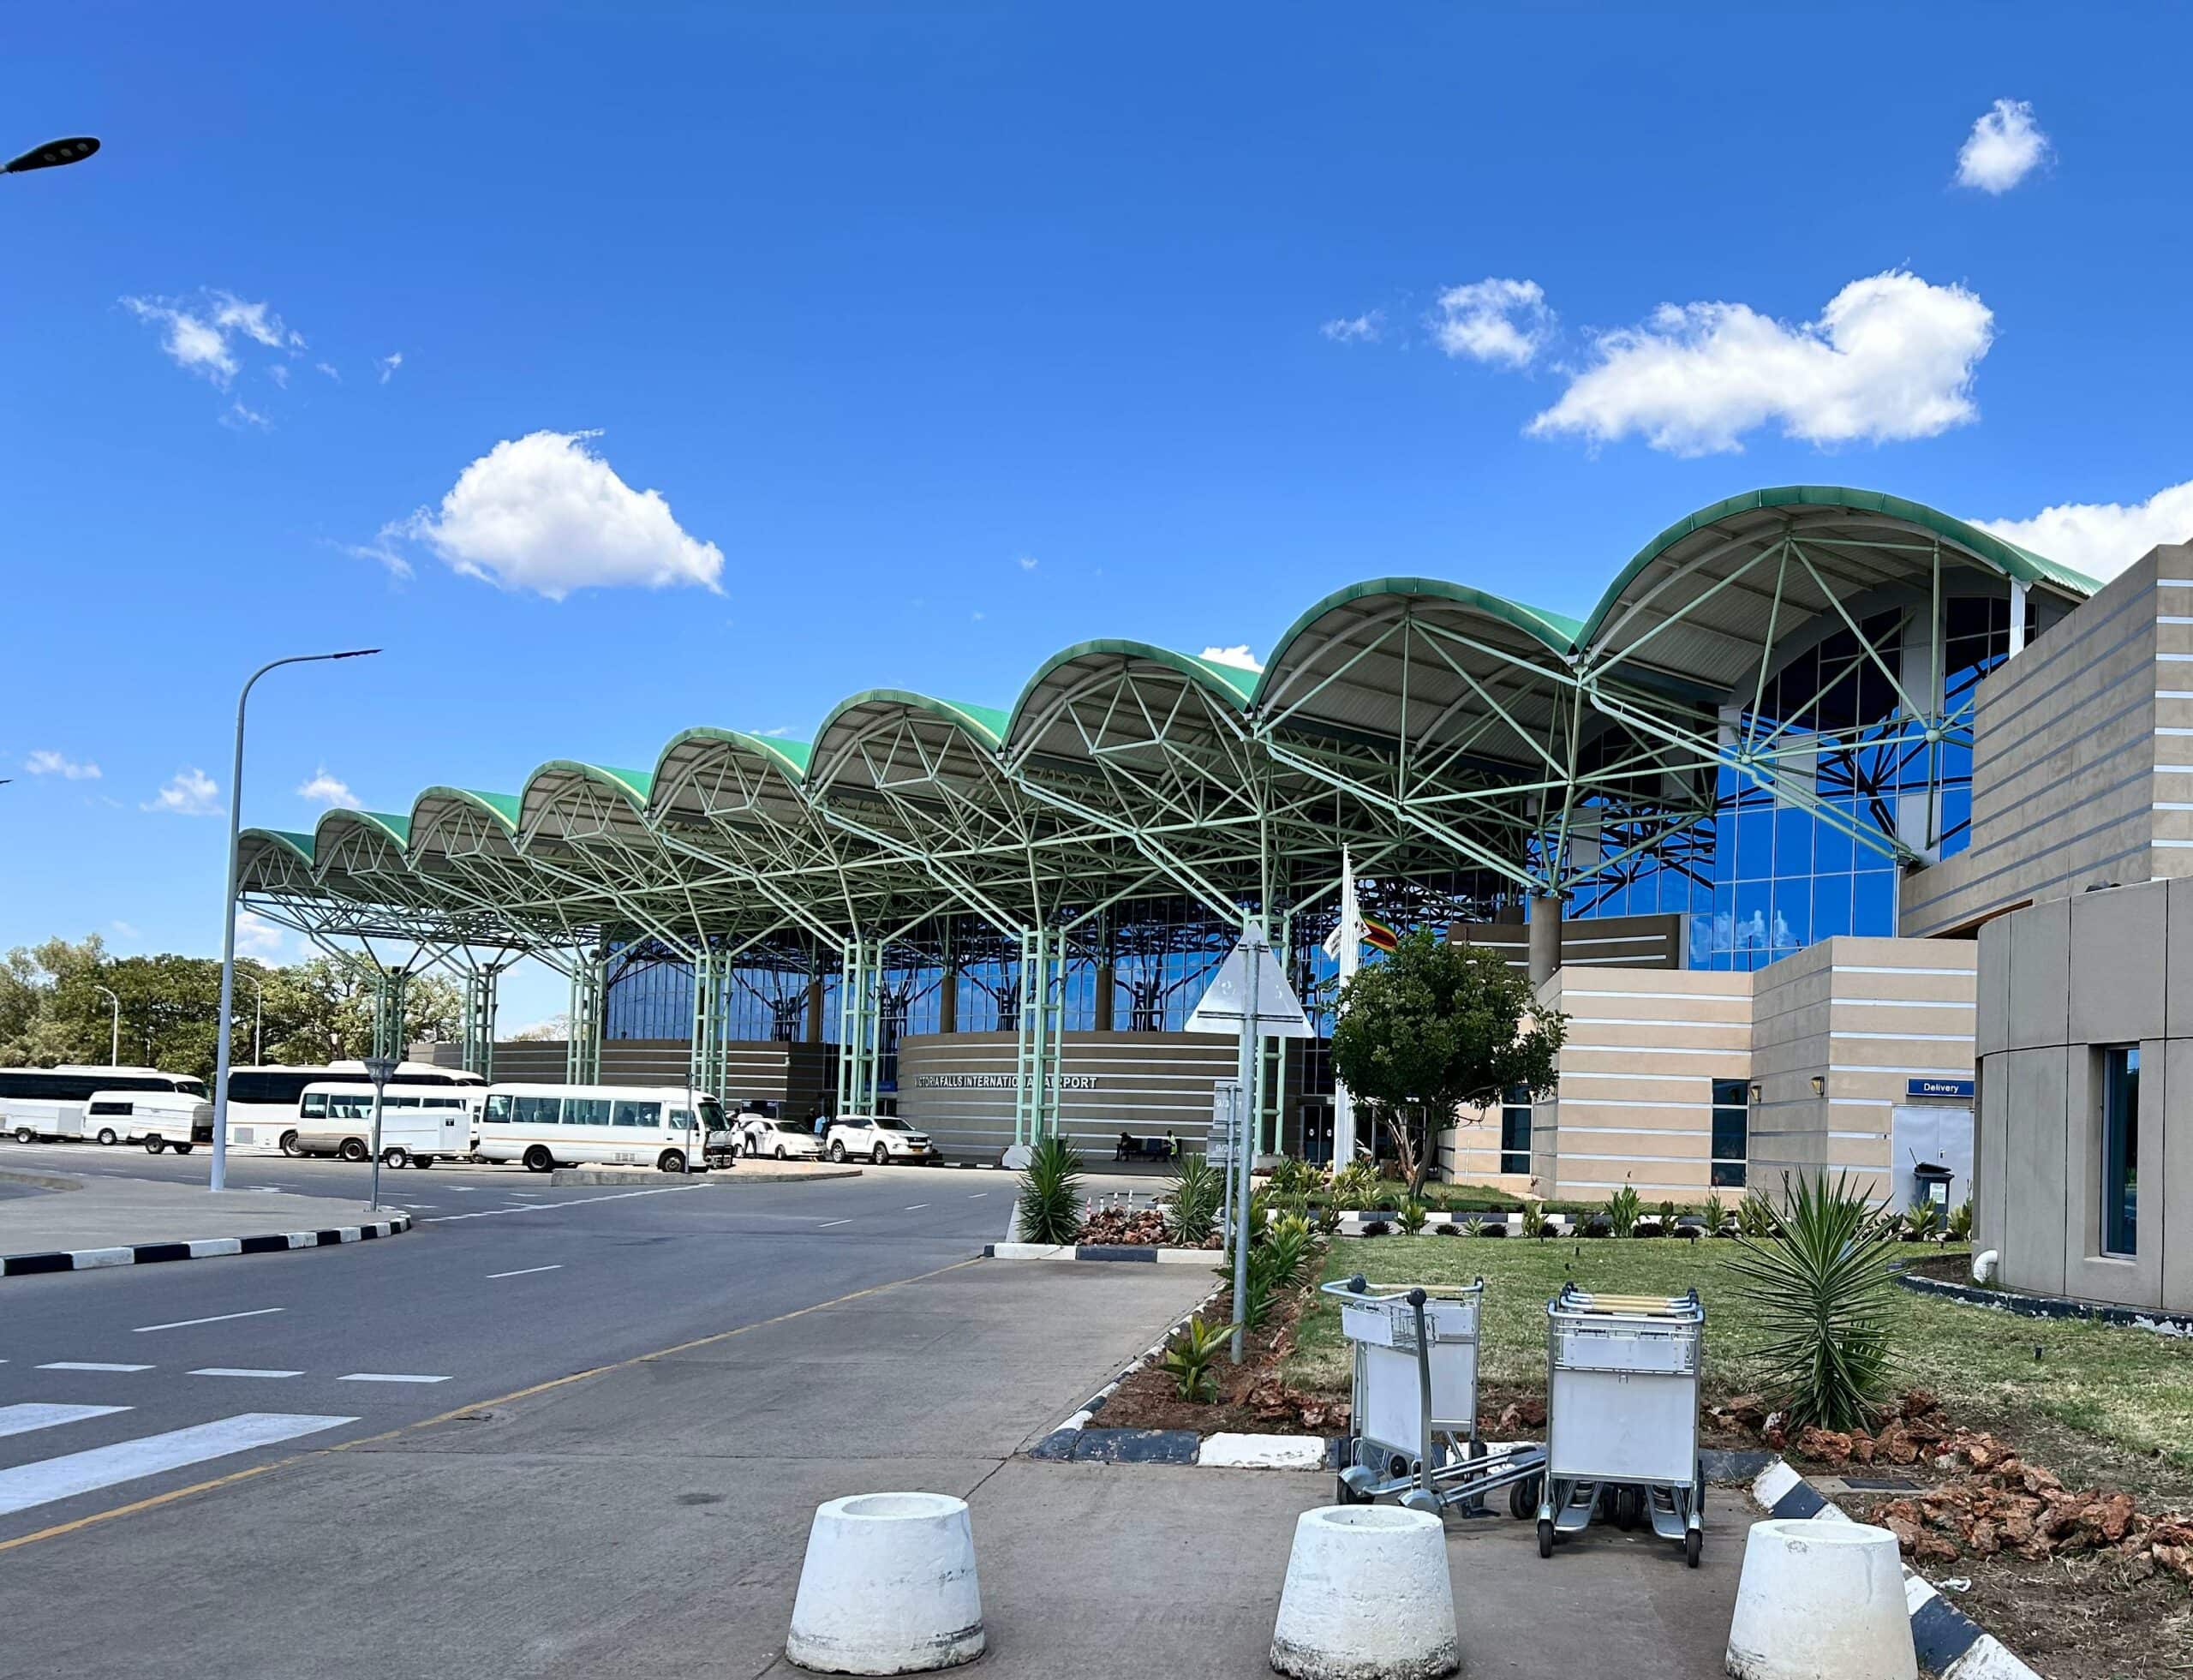 STATEMENT ON FLIGHT DISRUPTIONS AT VICTORIA FALLS INTERNATIONAL AIRPORT